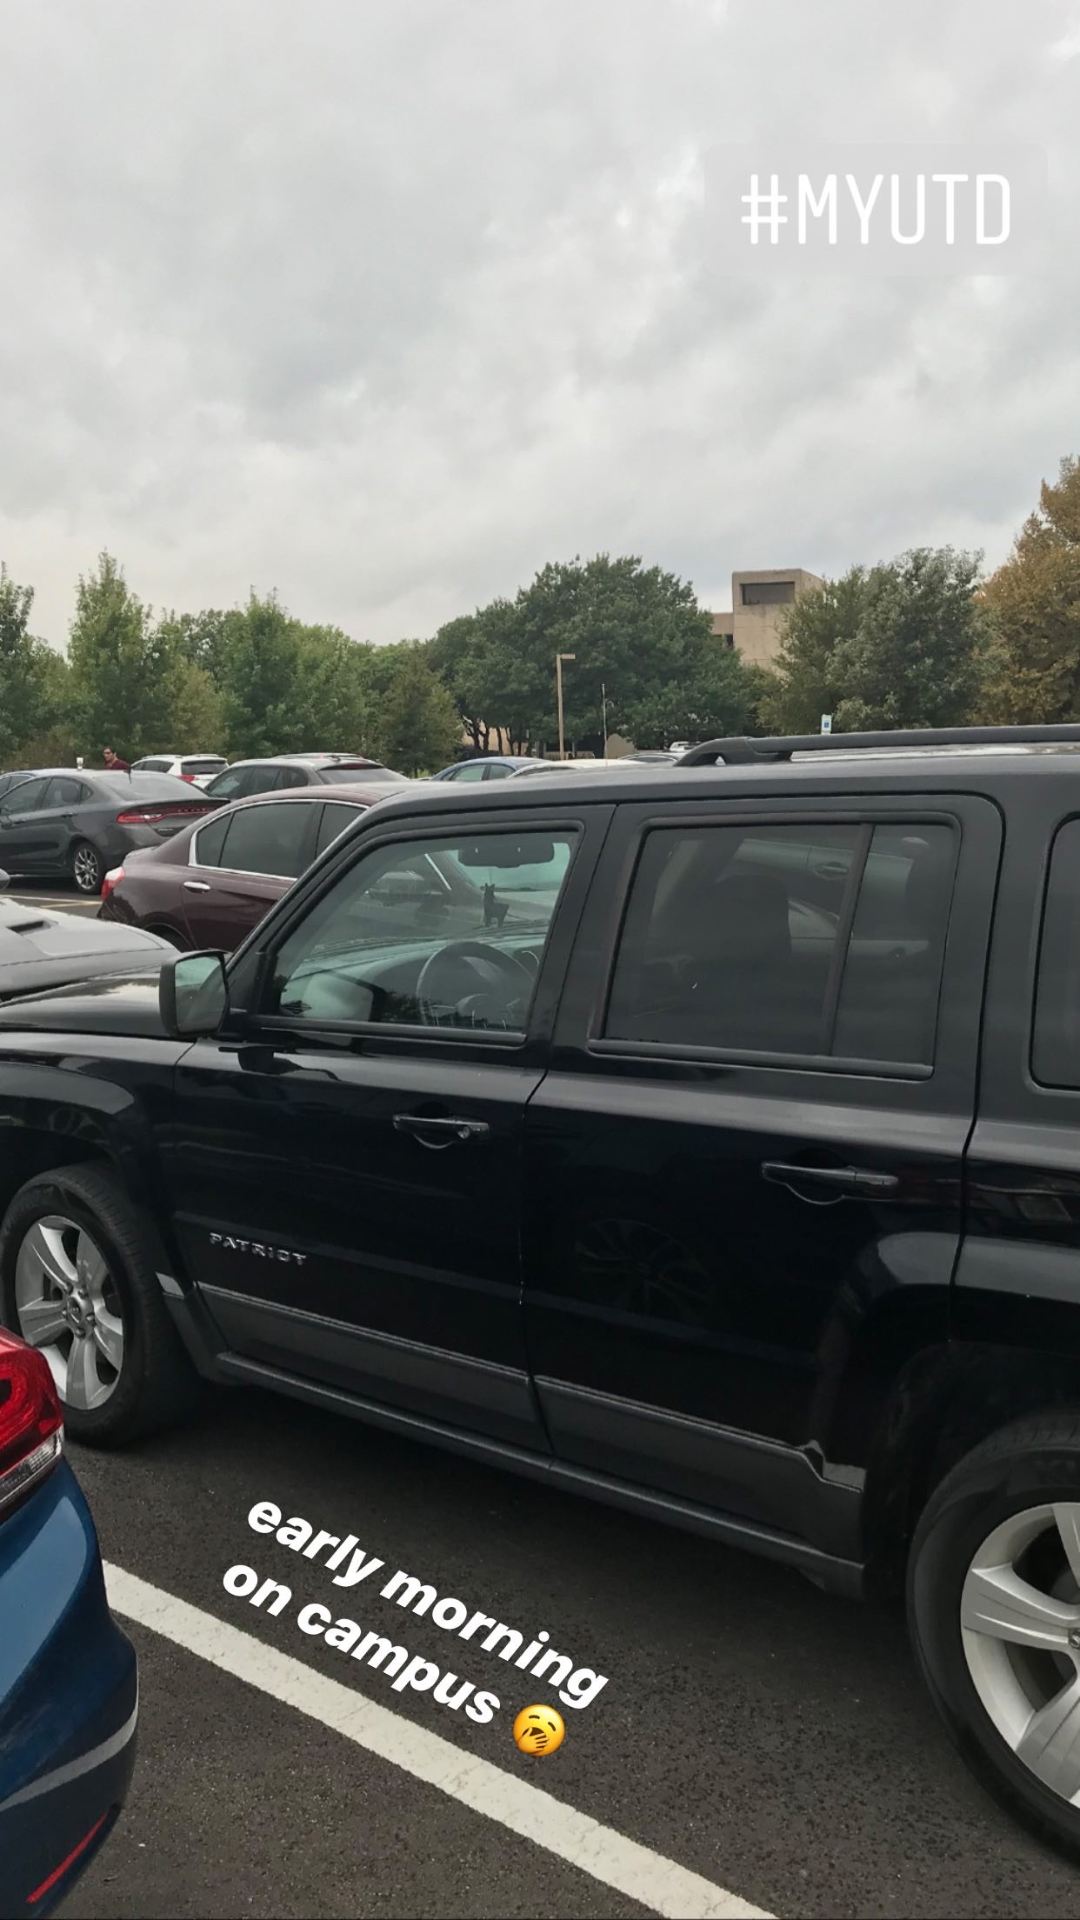  Yawn emoji. A black Jeep Patriot in a campus parking lot.